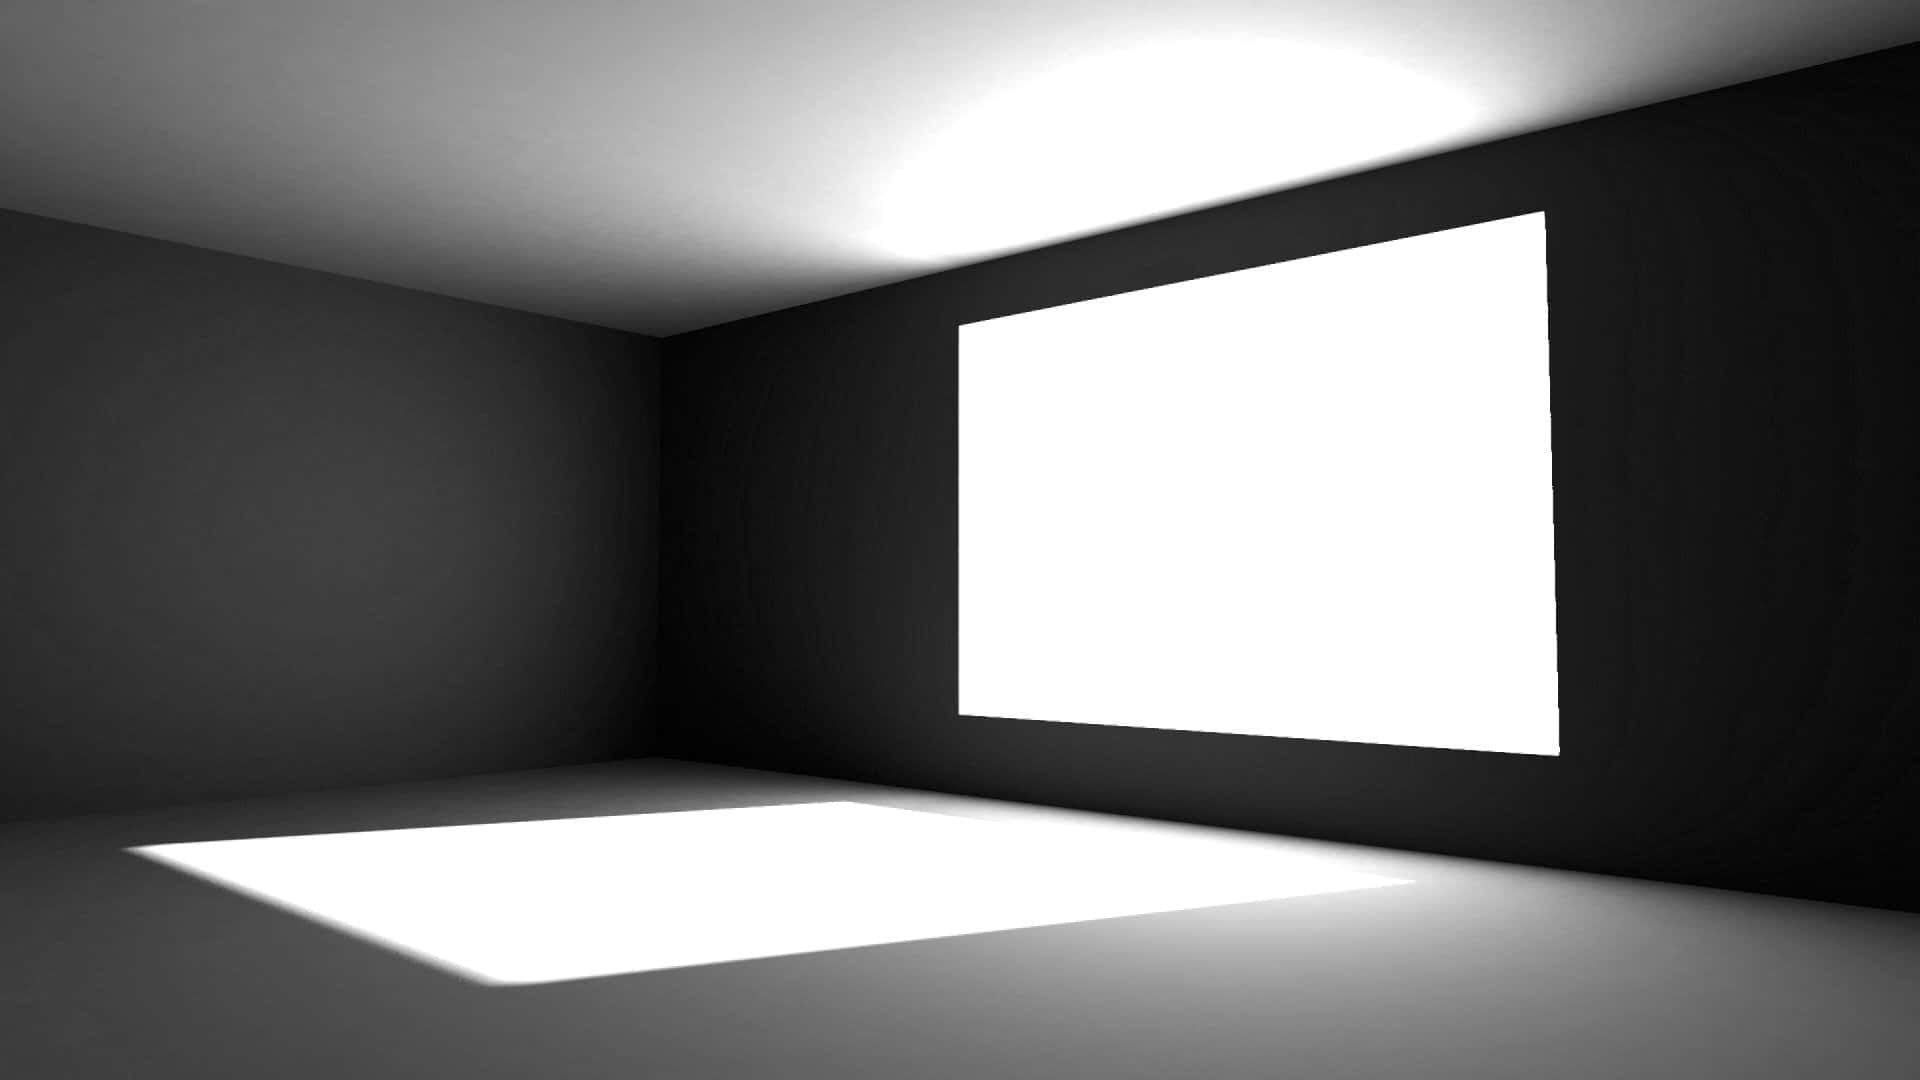 Monochrome Empty Room With Square Window